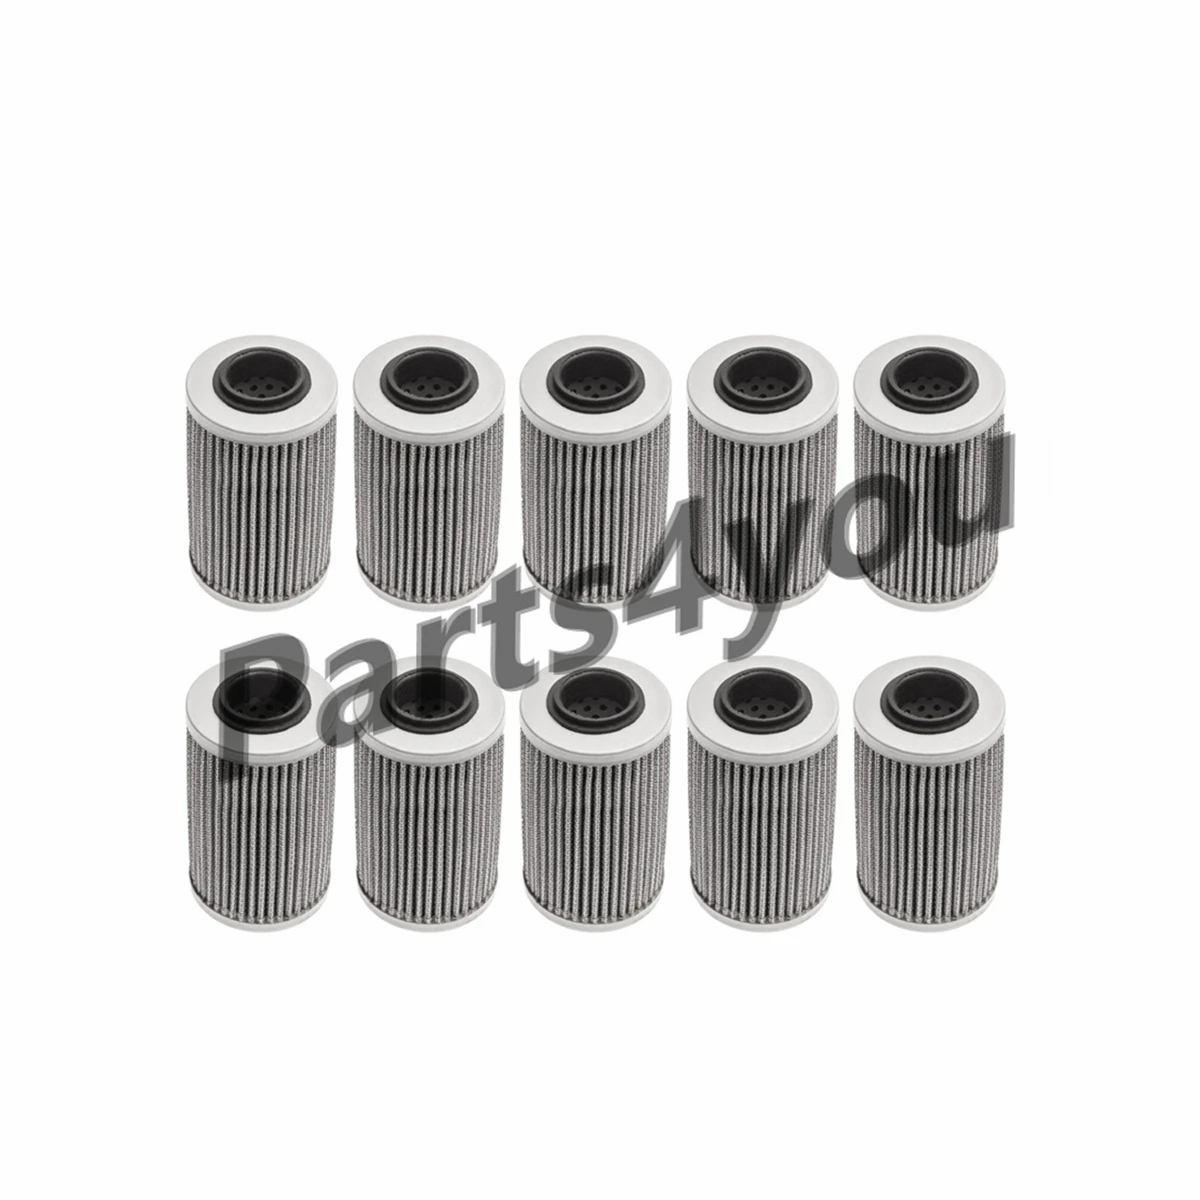 10PCS Oil Filter for Sea Doo Seadoo Rotax 1503 and 1603 4-Stroke Motors GTX 300 GTI 130 155 Spyder 420956744 420956741 711956741